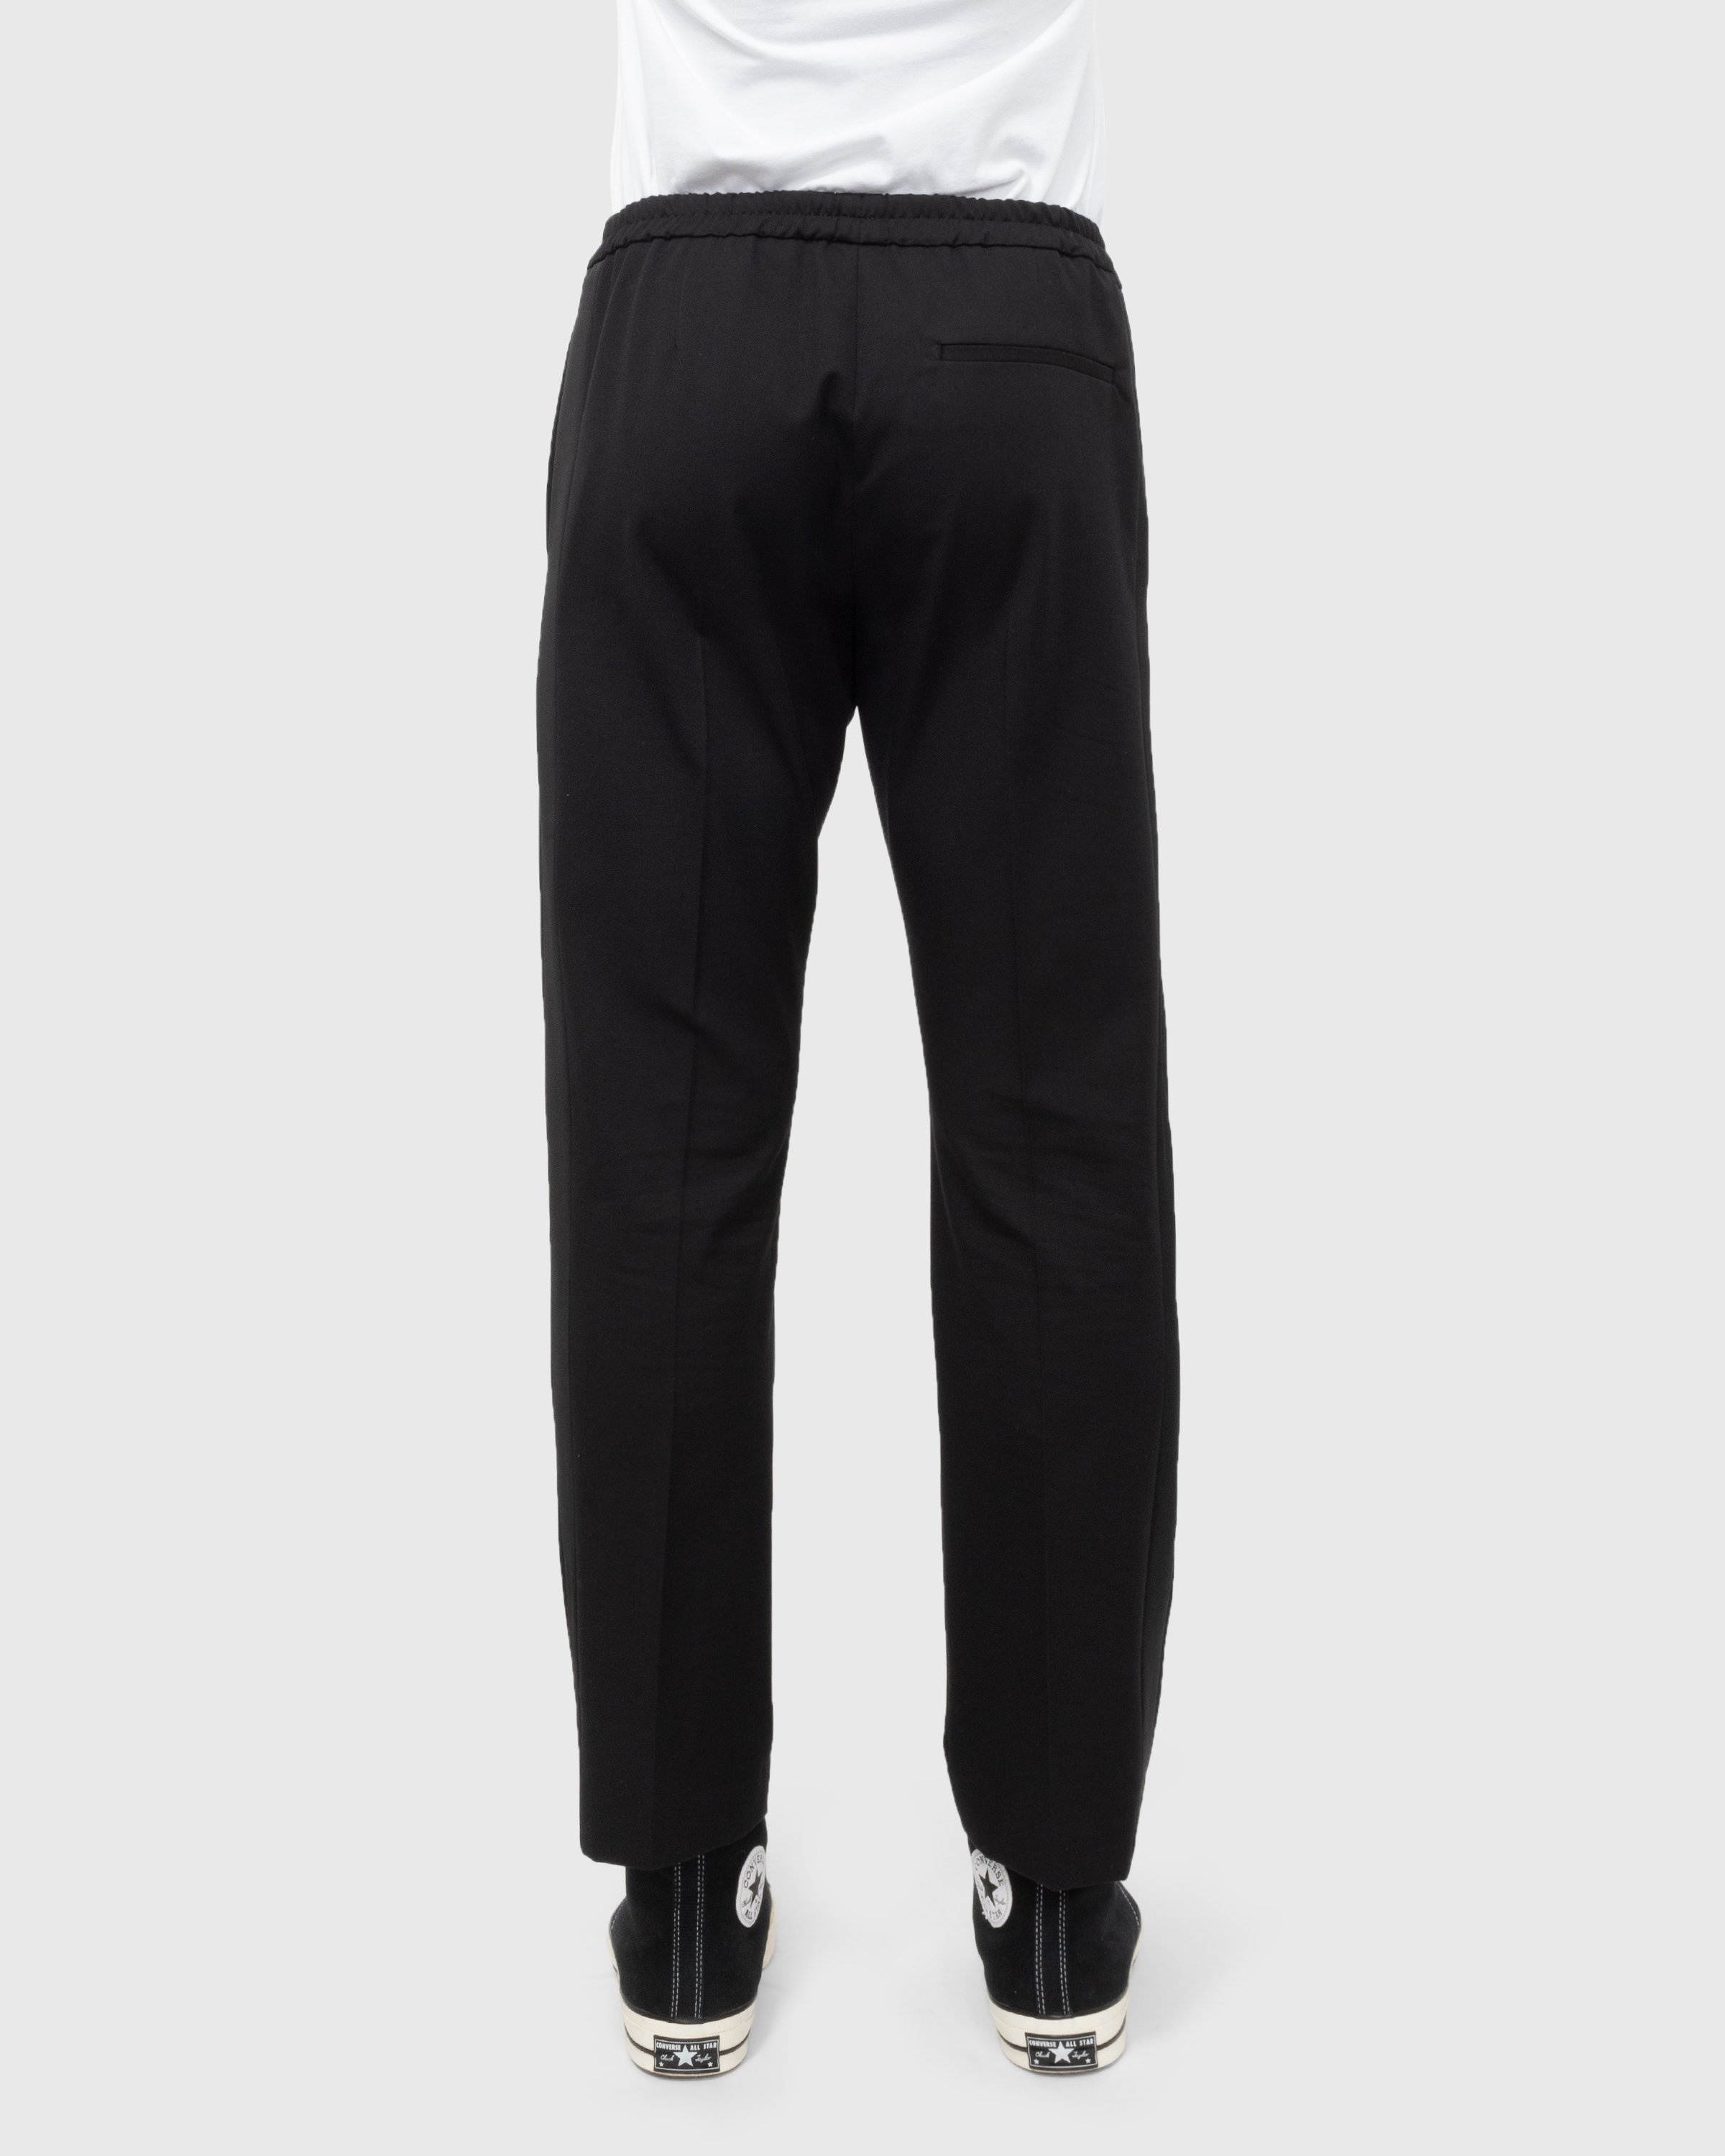 Dries van Noten – Parkino Pants Black - Trousers - Black - Image 2